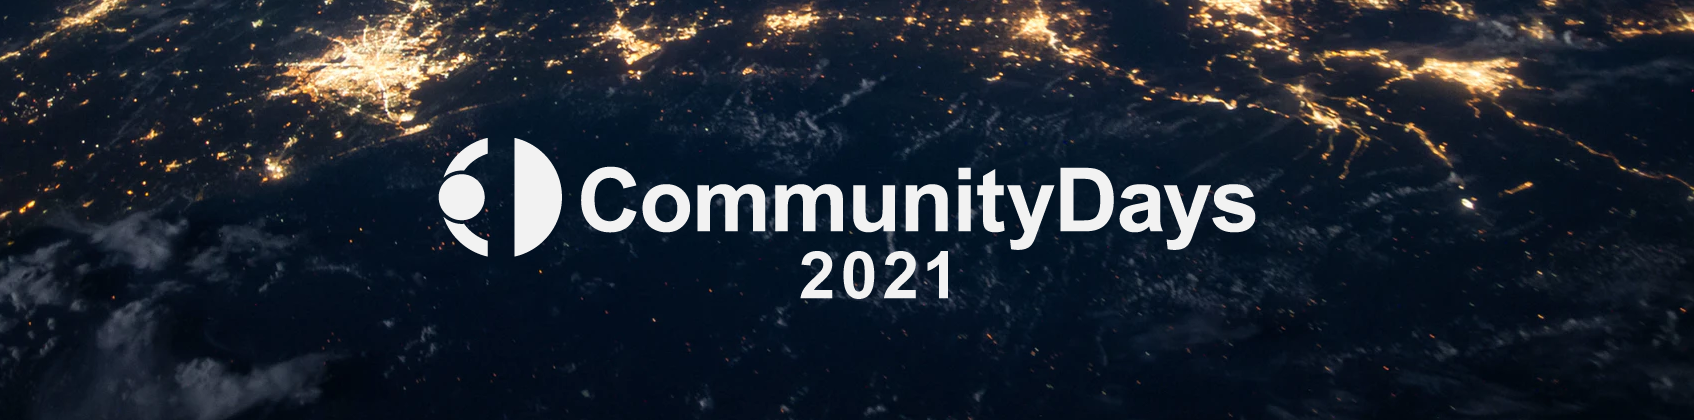 Banner dell'evento Community Days 2021